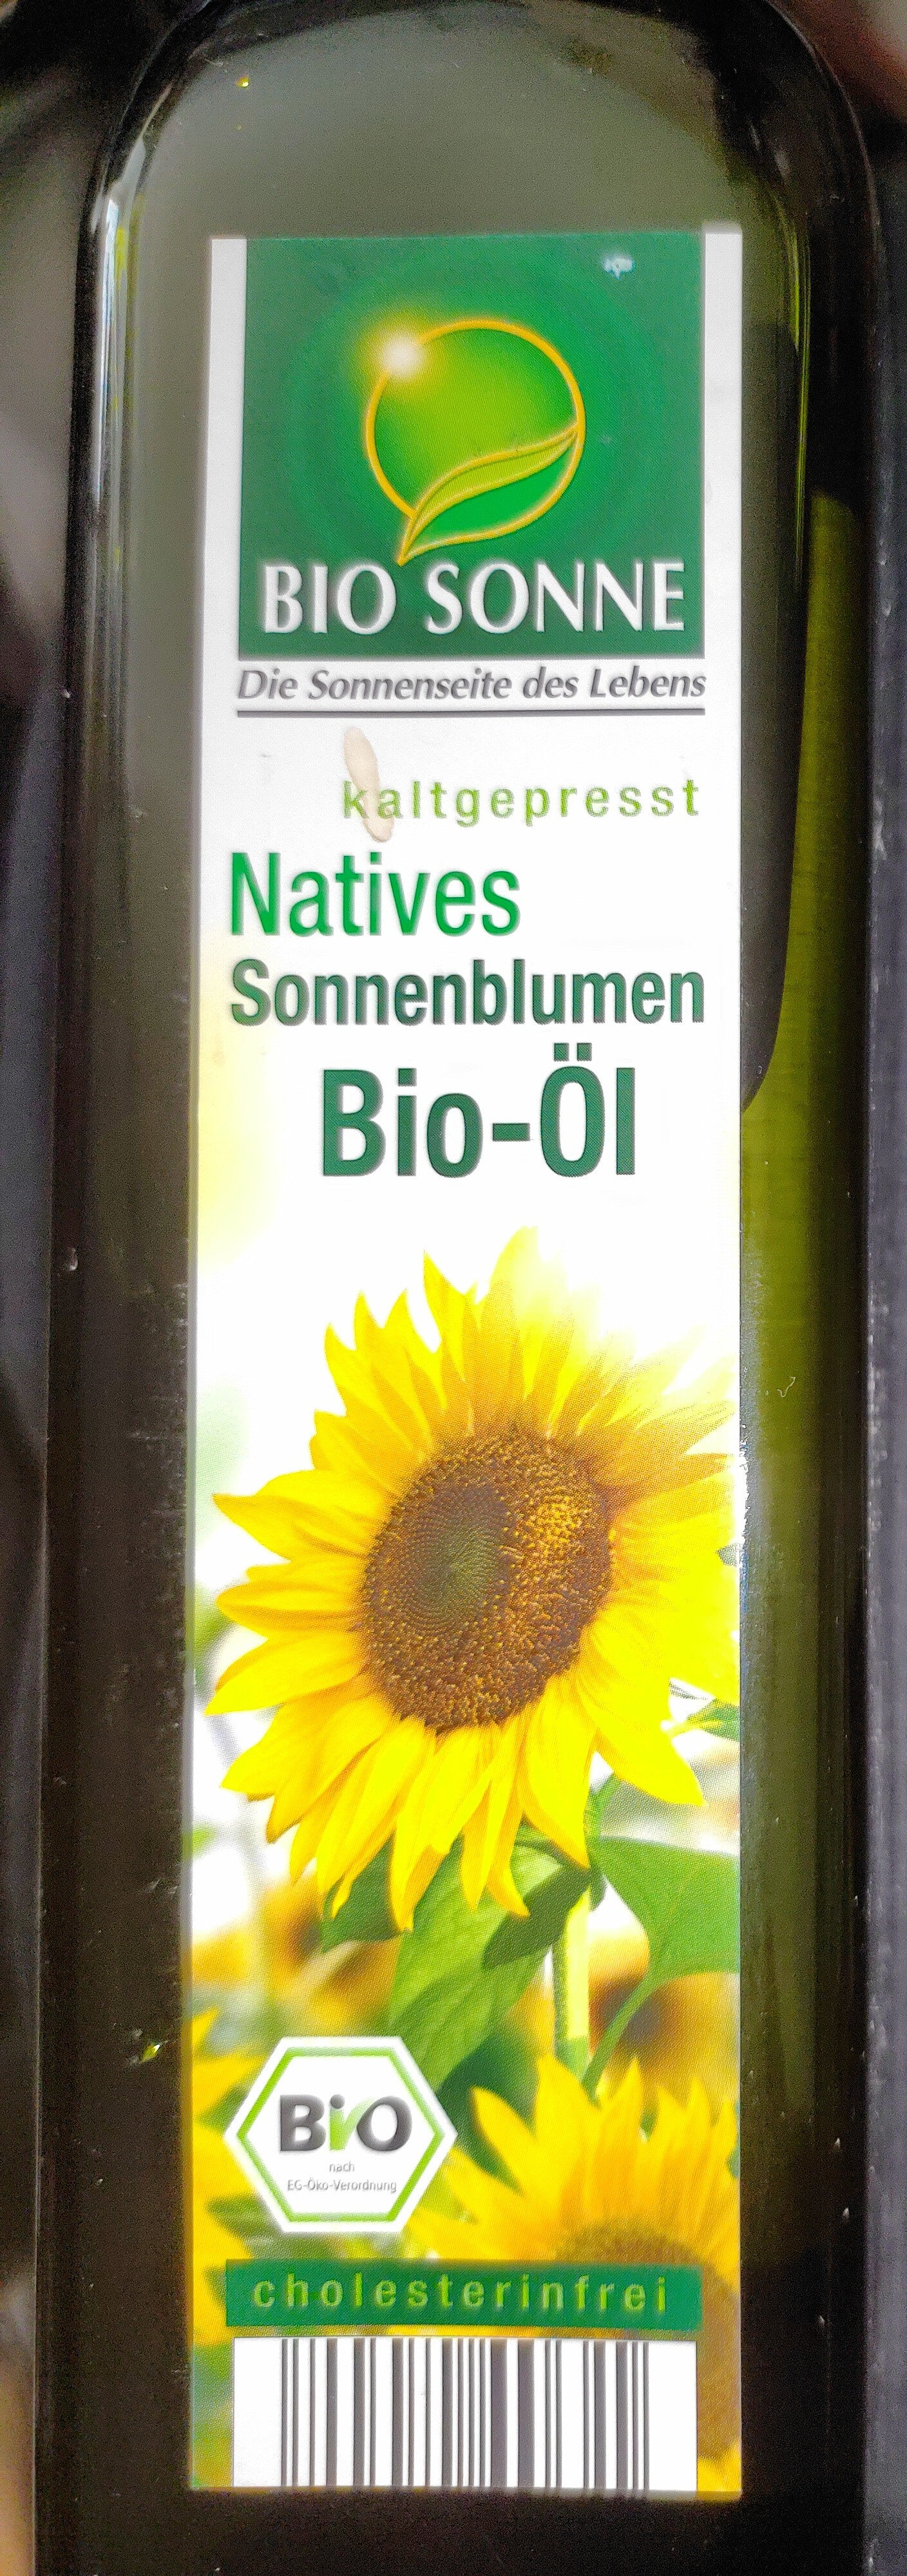 Natives Sonnenblumen Bio-Öl - Produkt